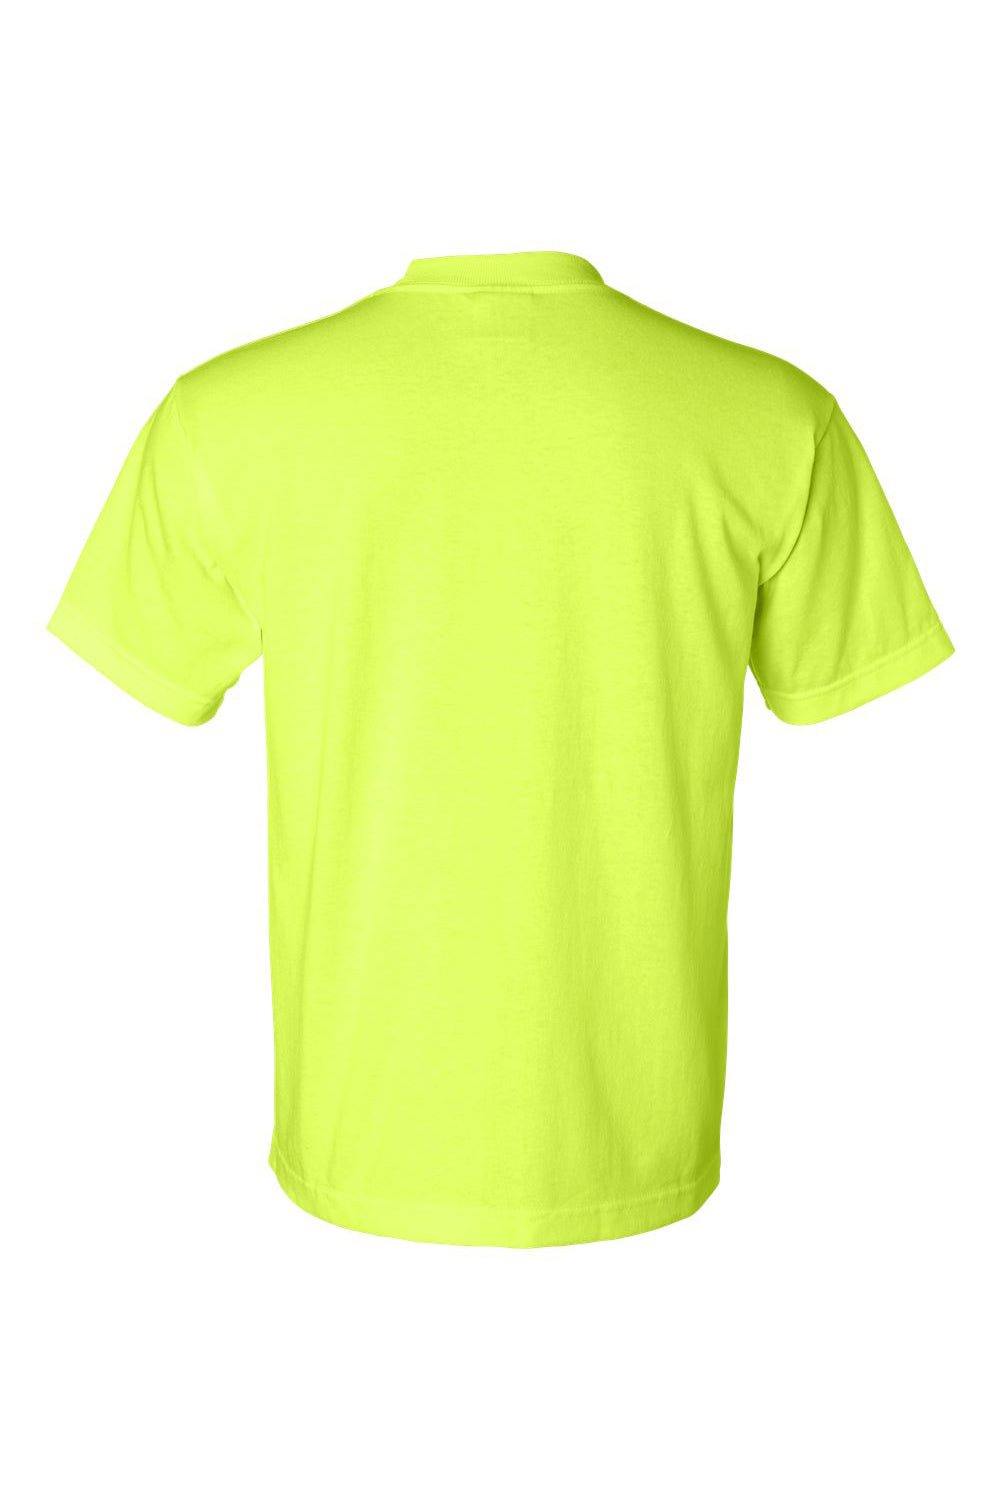 Bayside 1701 Mens USA Made Short Sleeve Crewneck T-Shirt Safety Green Flat Back